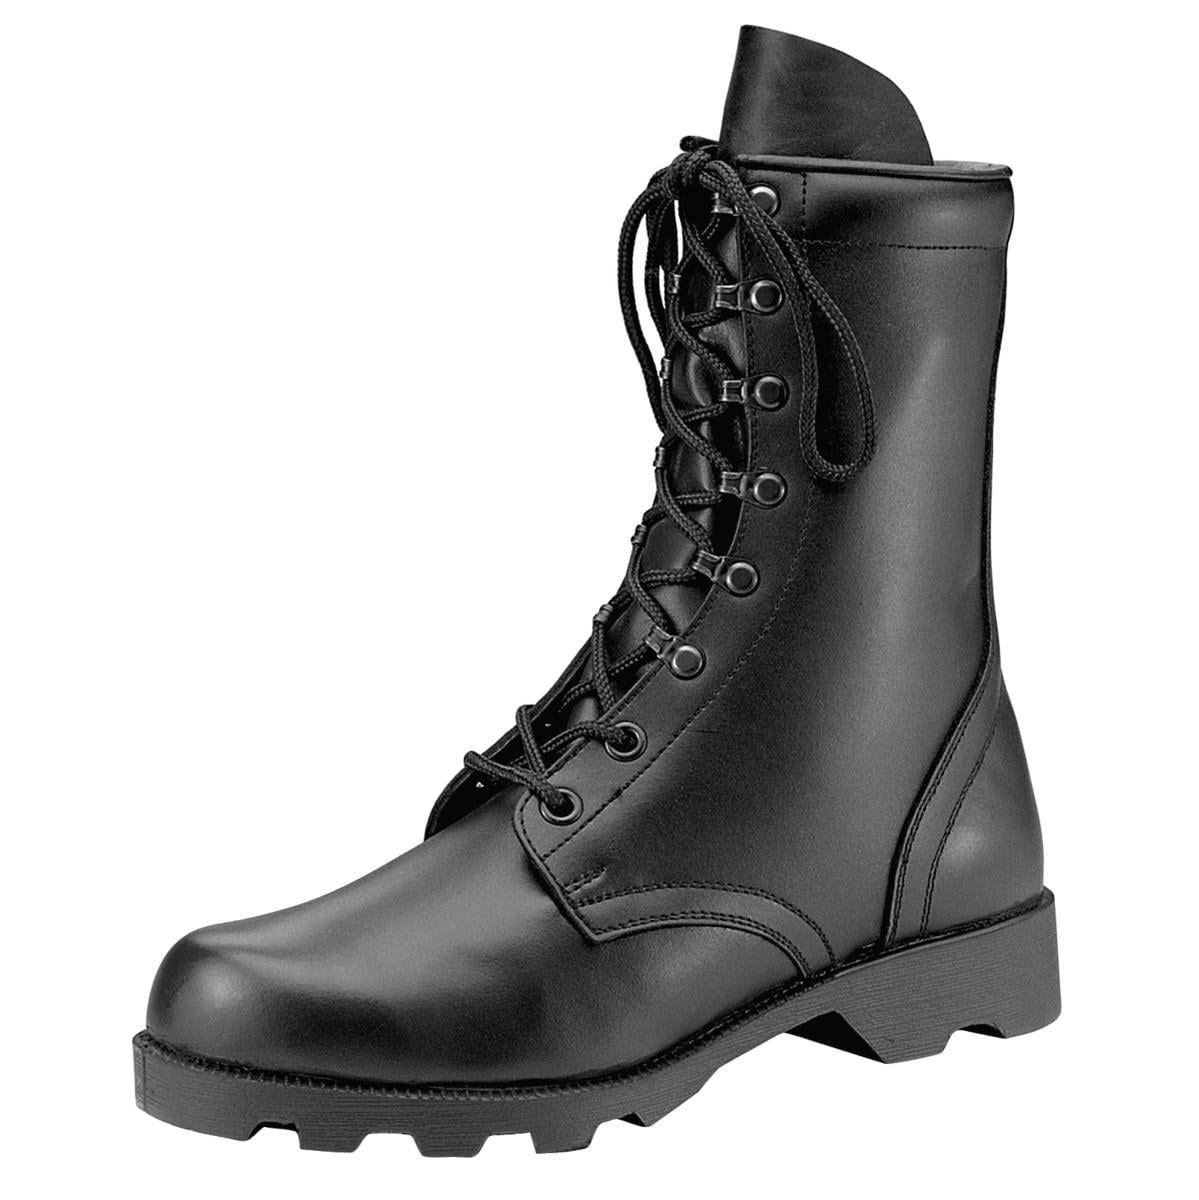 Rothco G.I.Style OD or Black Jungle Boots 